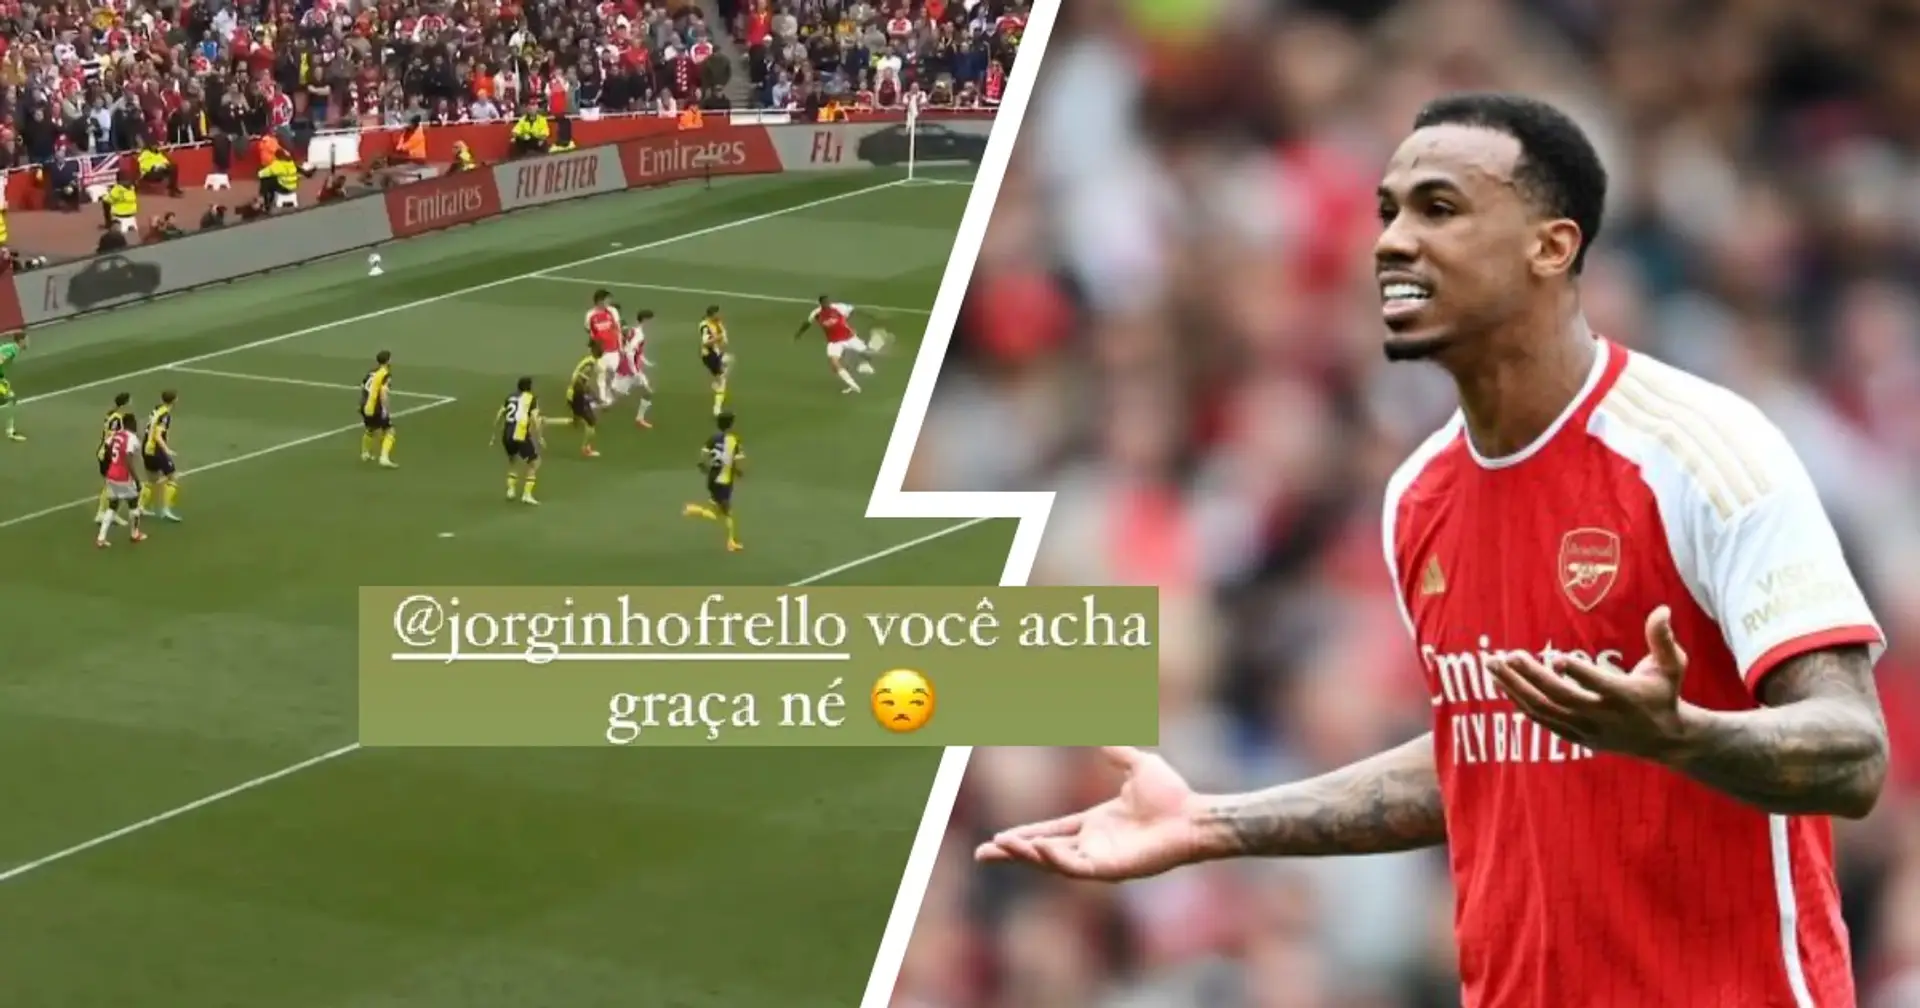 Gabriel sends blunt message to Arsenal teammate about disallowed goal - Saka responds 